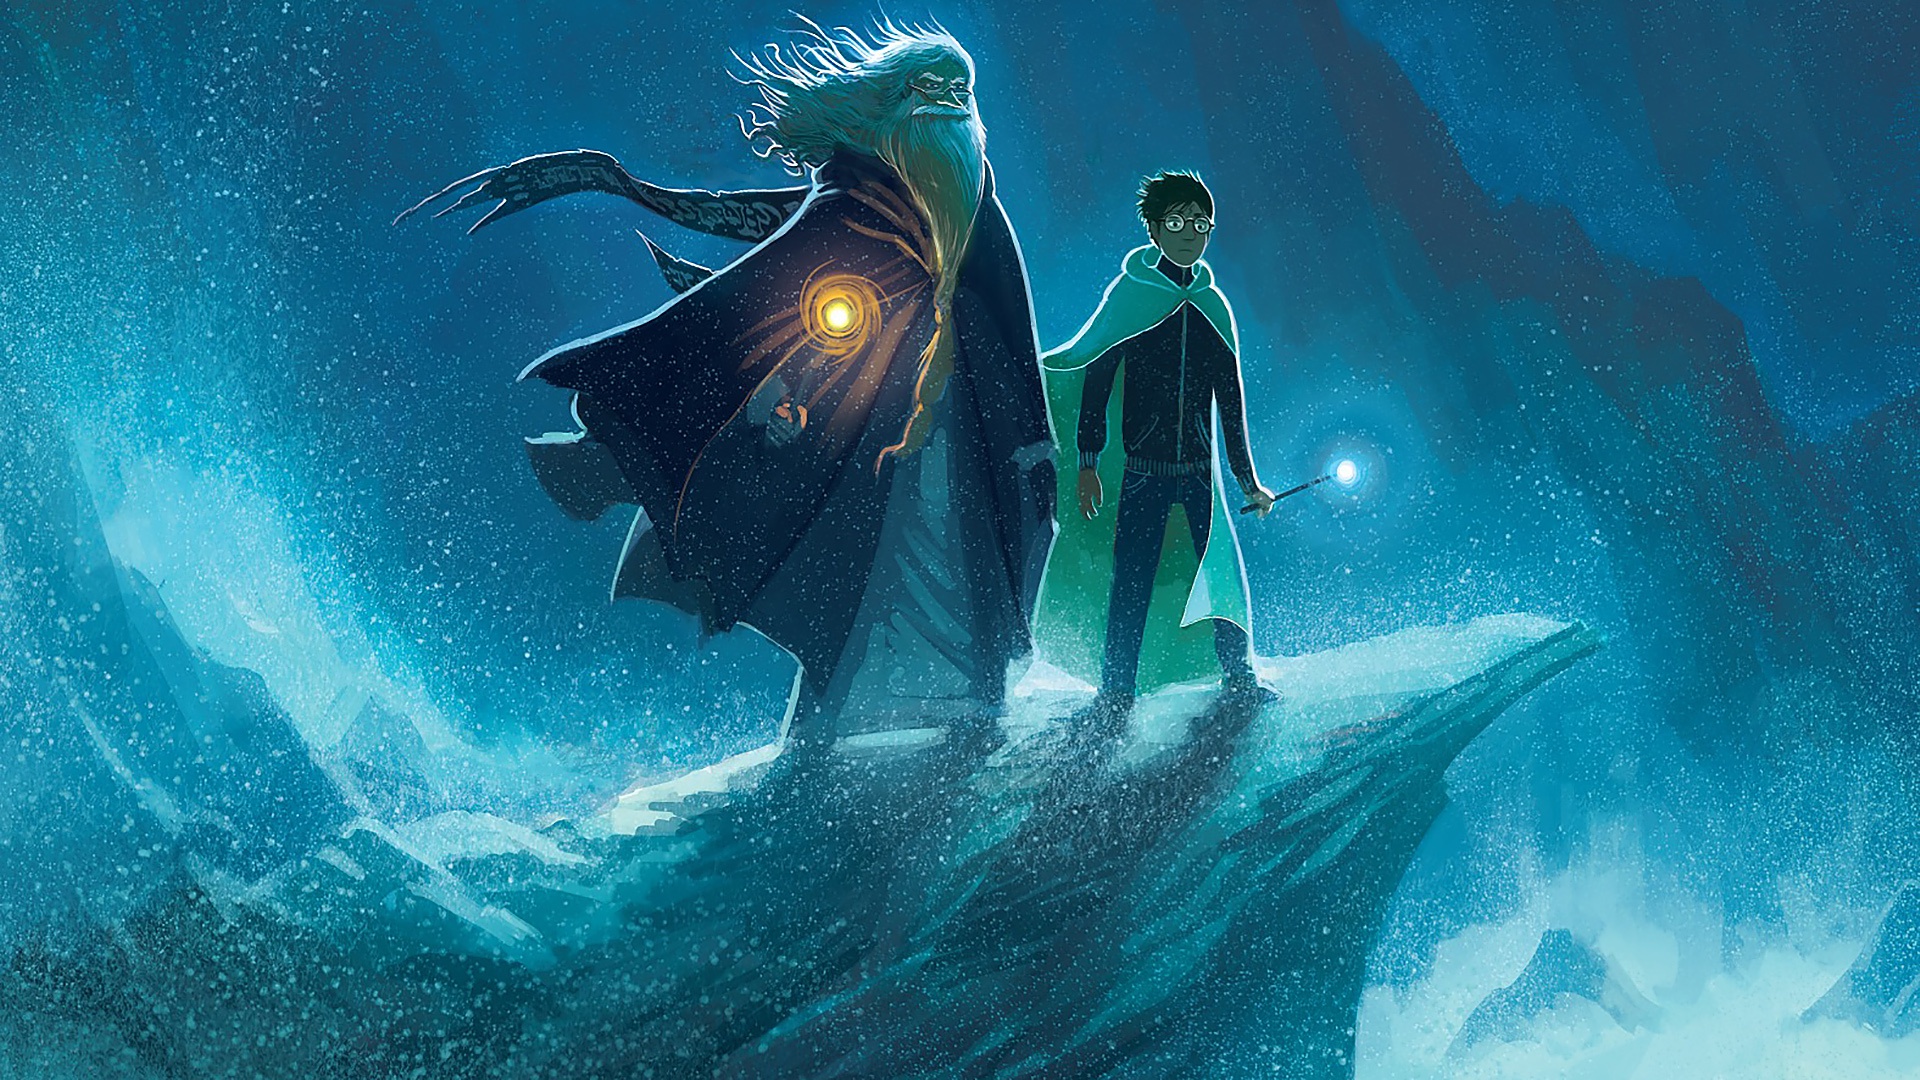 Fantasy Harry Potter HD Wallpaper by Kazu Kibuishi